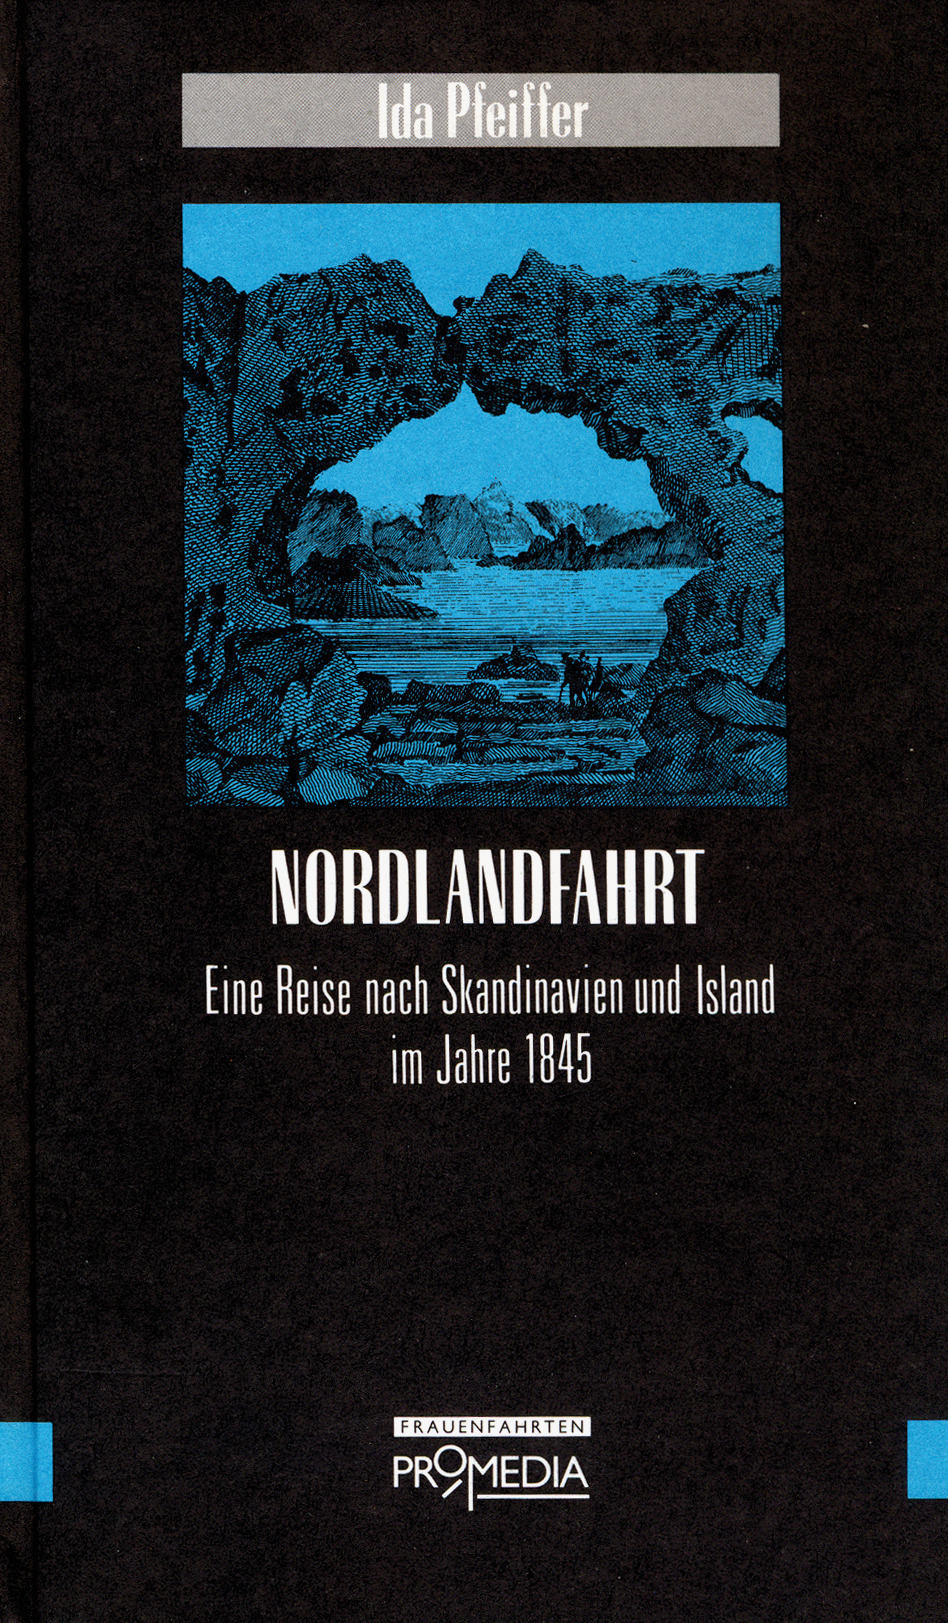 [Cover] Nordlandfahrt